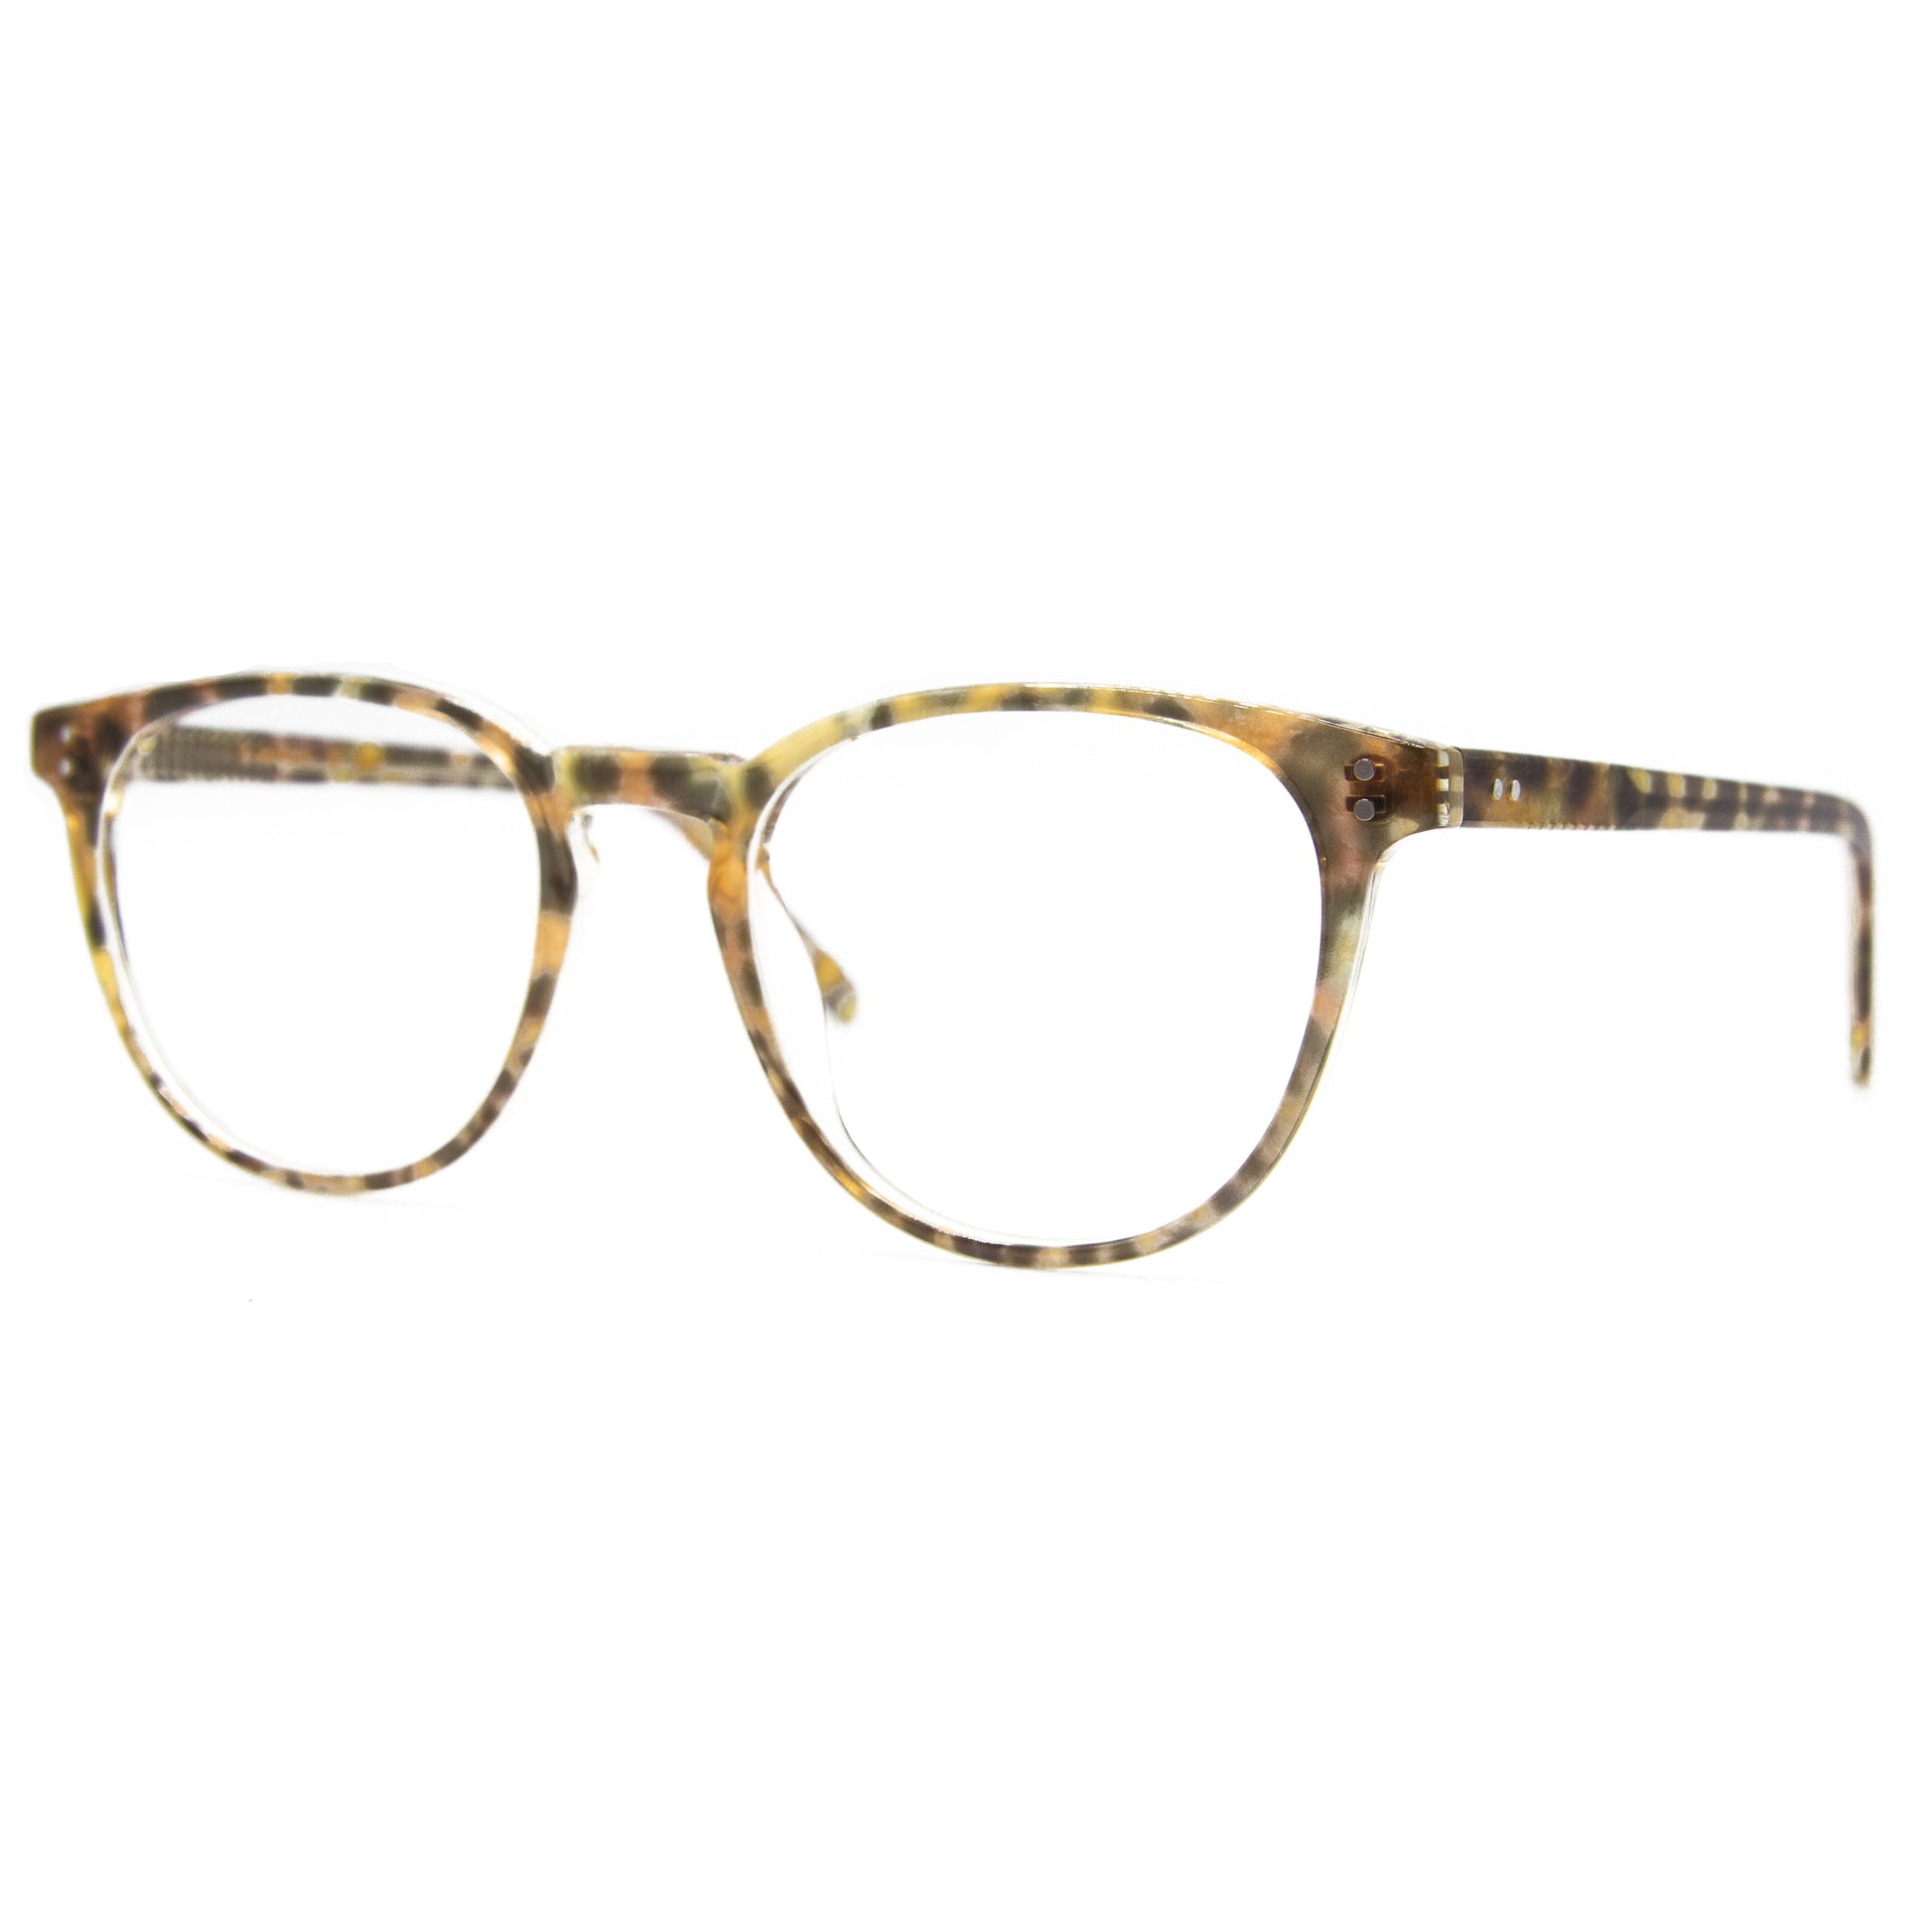 3 brothers - Ant - Leopard - Prescription Glasses - Side